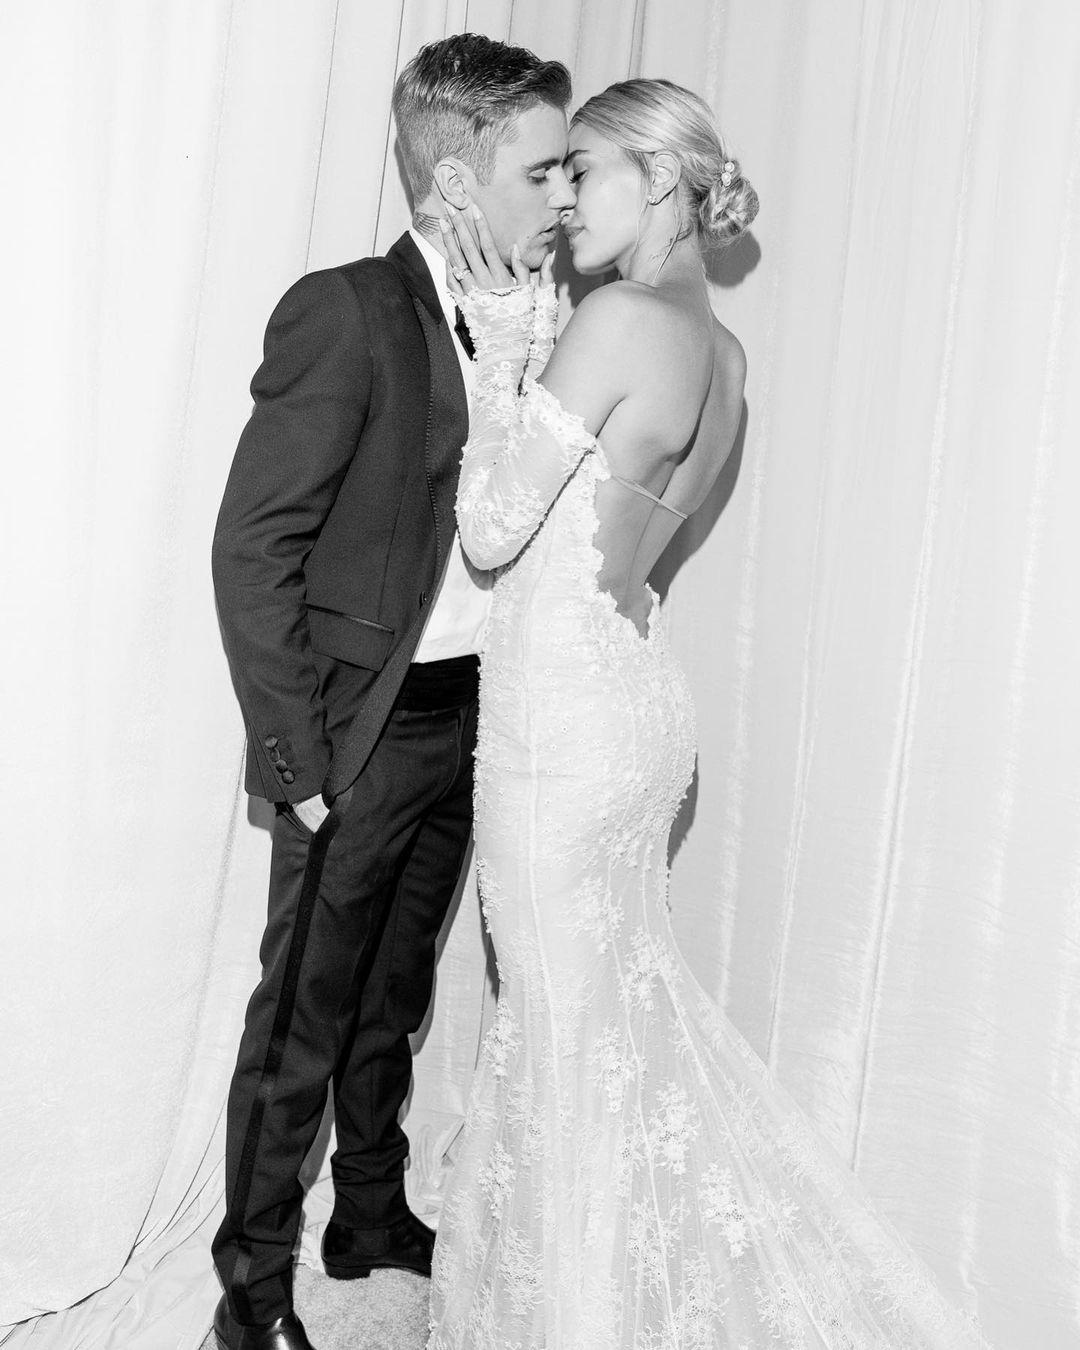 Justin & Hailey Bieber on their wedding day